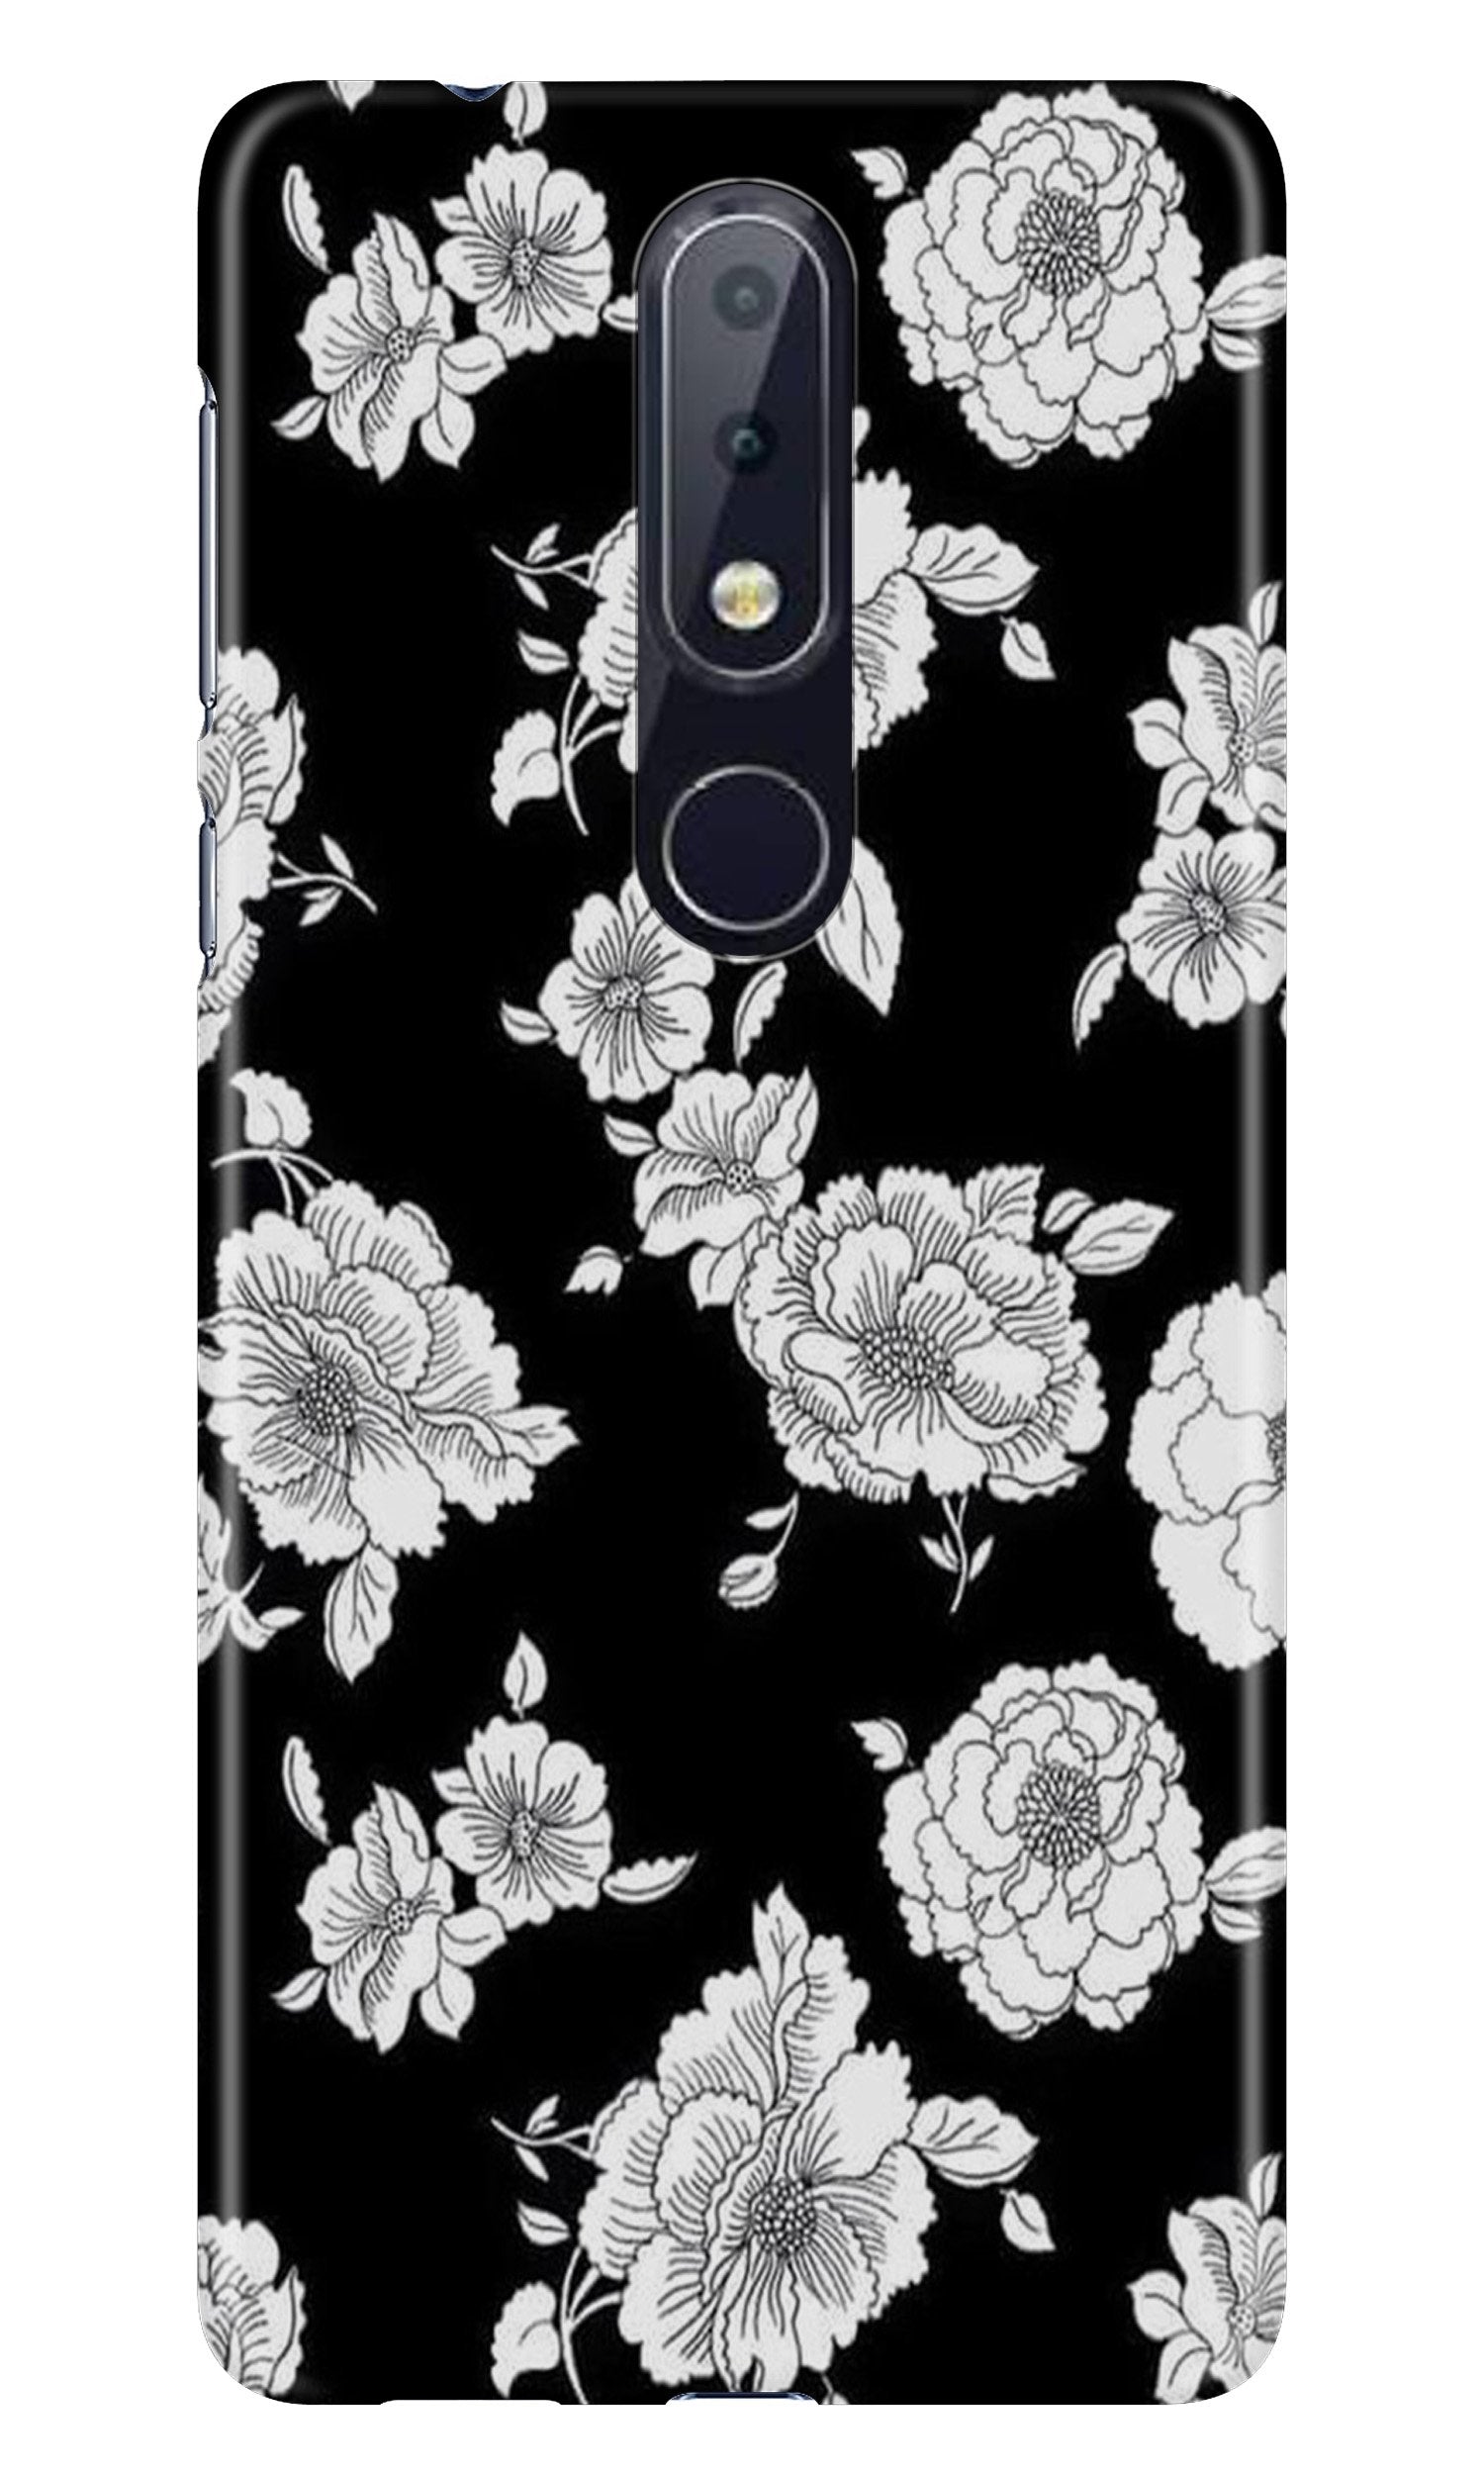 White flowers Black Background Case for Nokia 3.2